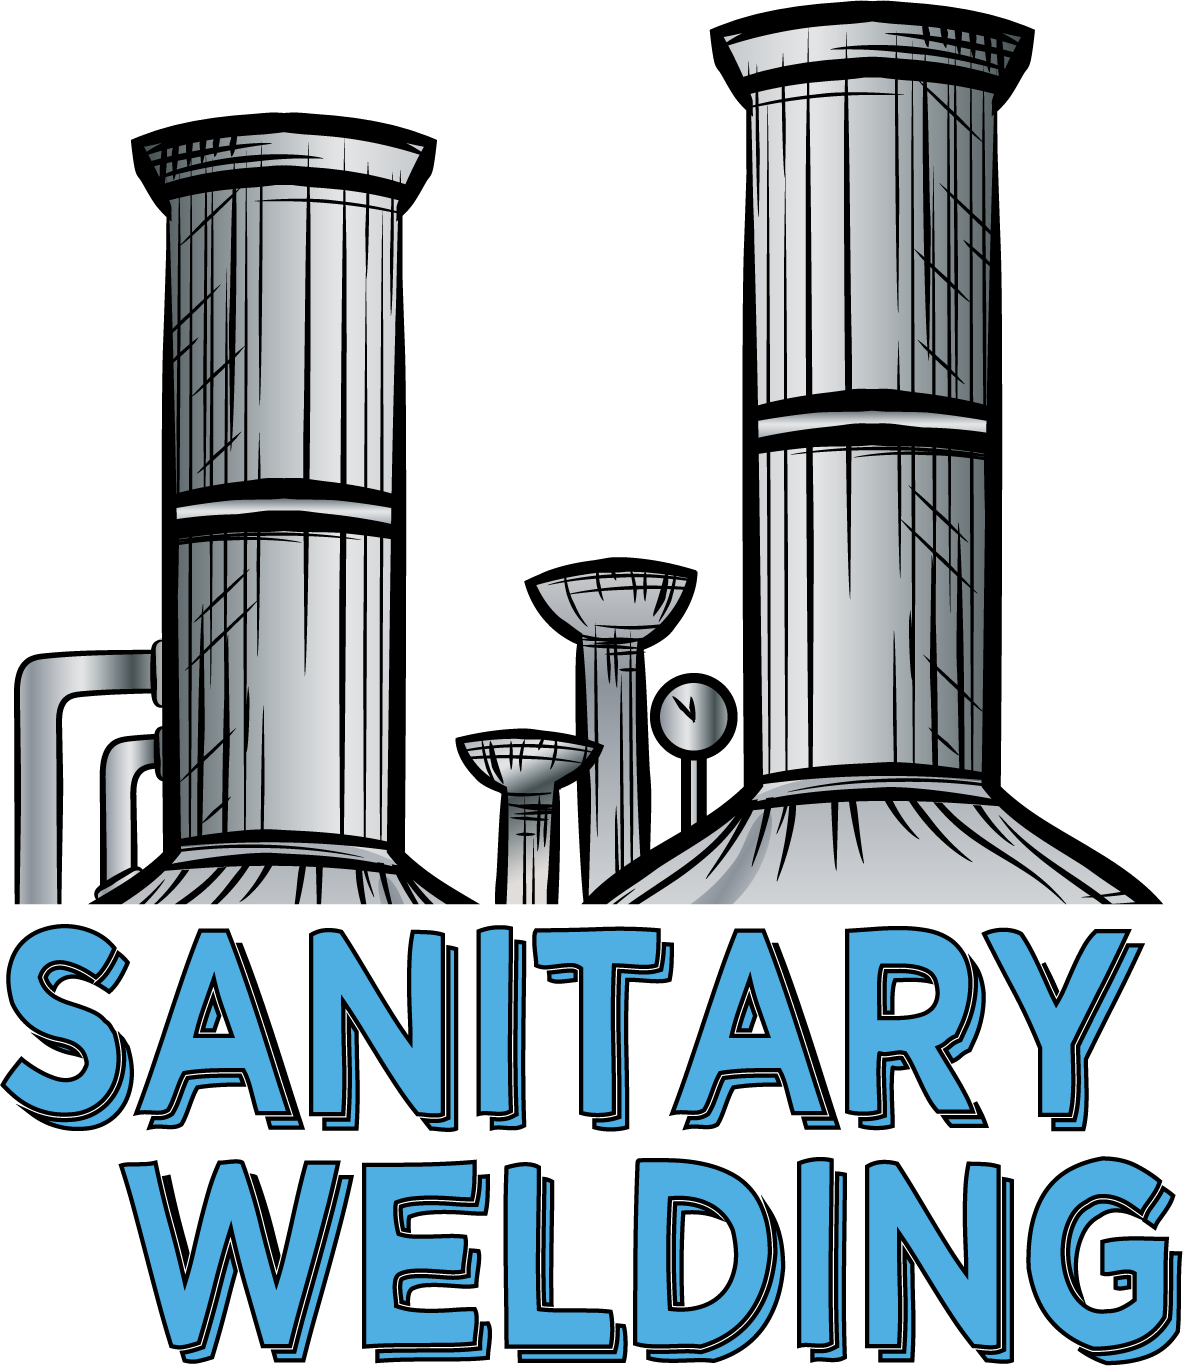 Sanitary Welding LLC is exhibiting at CannaCon